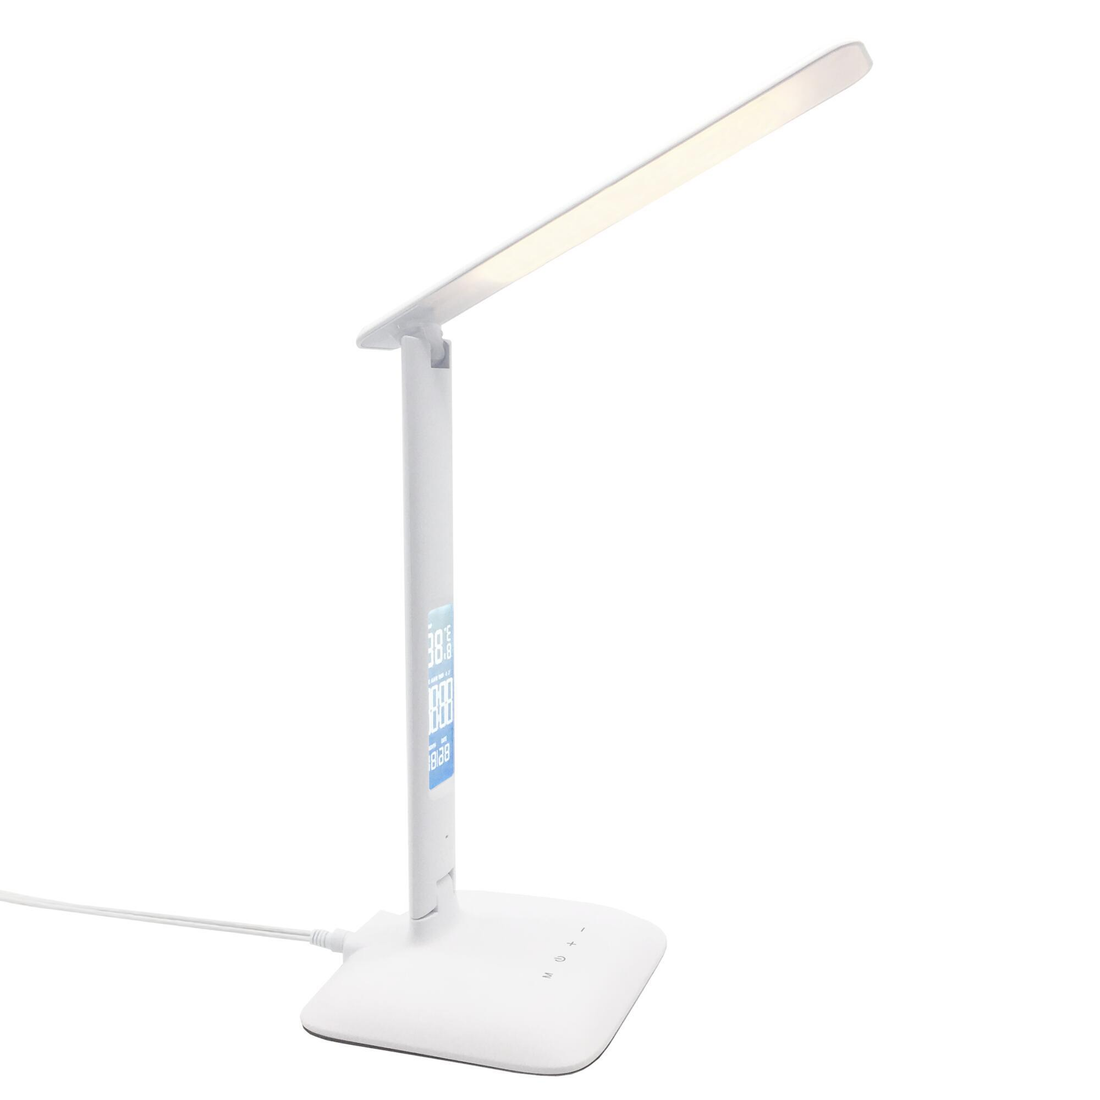 STUDIO LAMP ALEX PLASTIC WHITE H26 LED 5W 4 STEP WITH ALARM AND USB